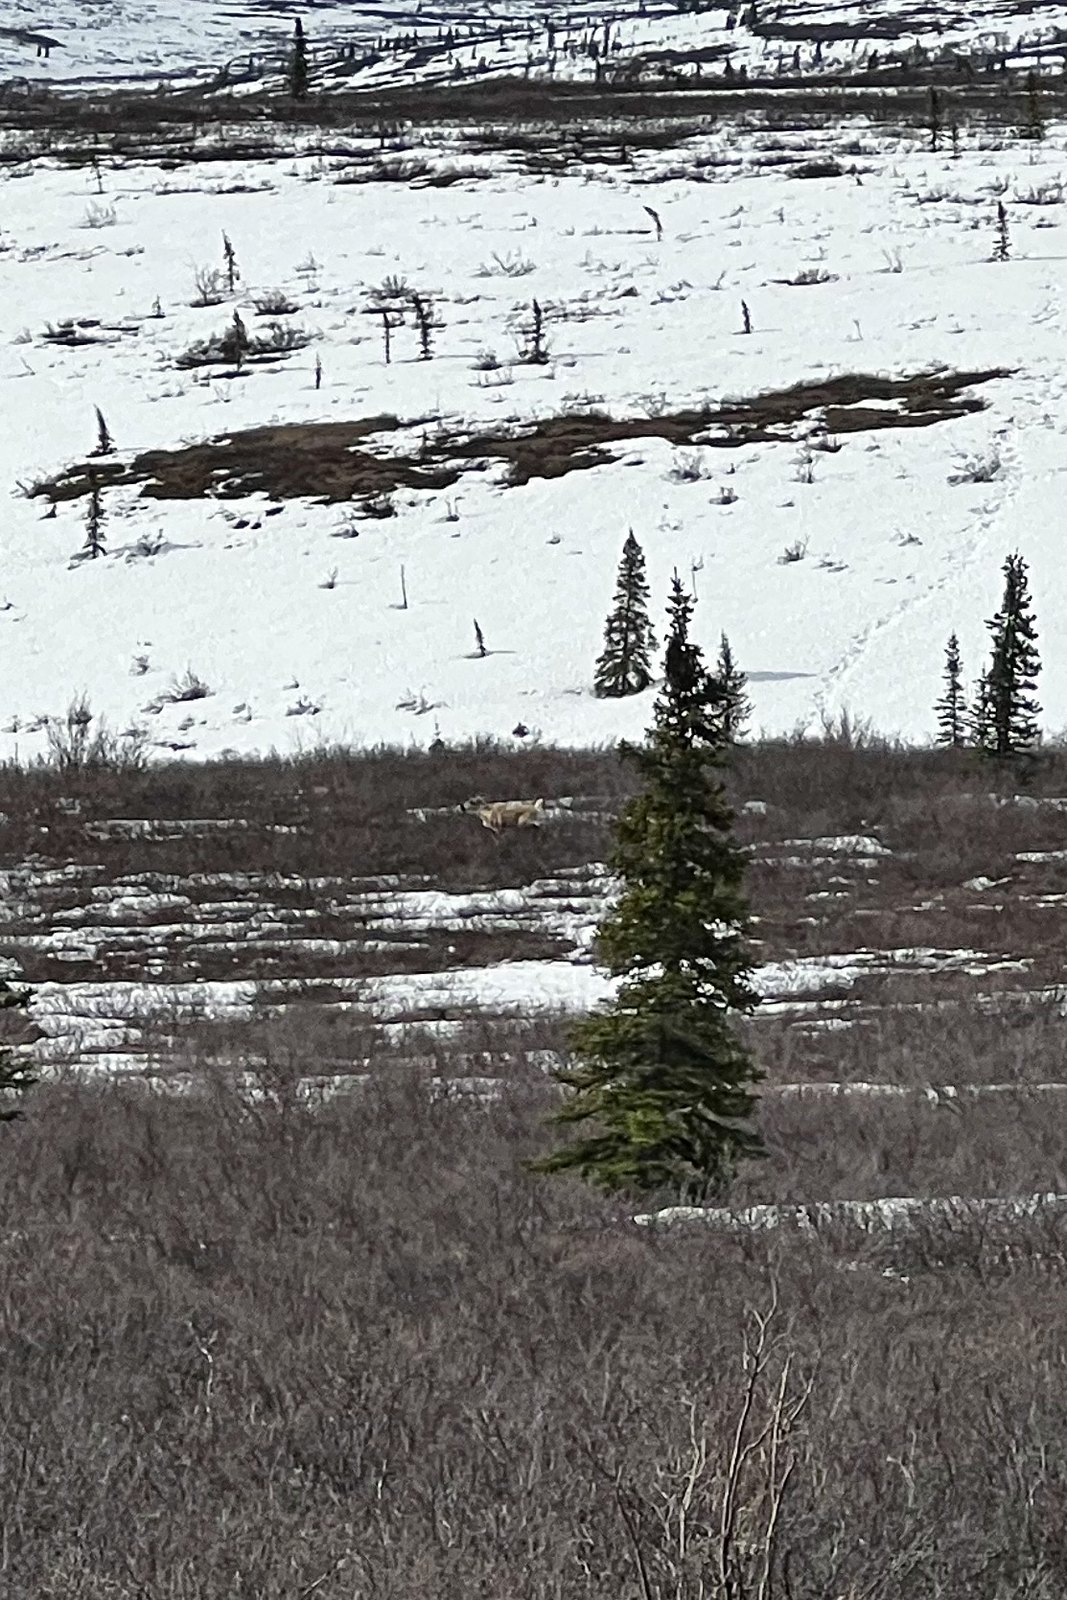 Caribou in the tundra (centre)